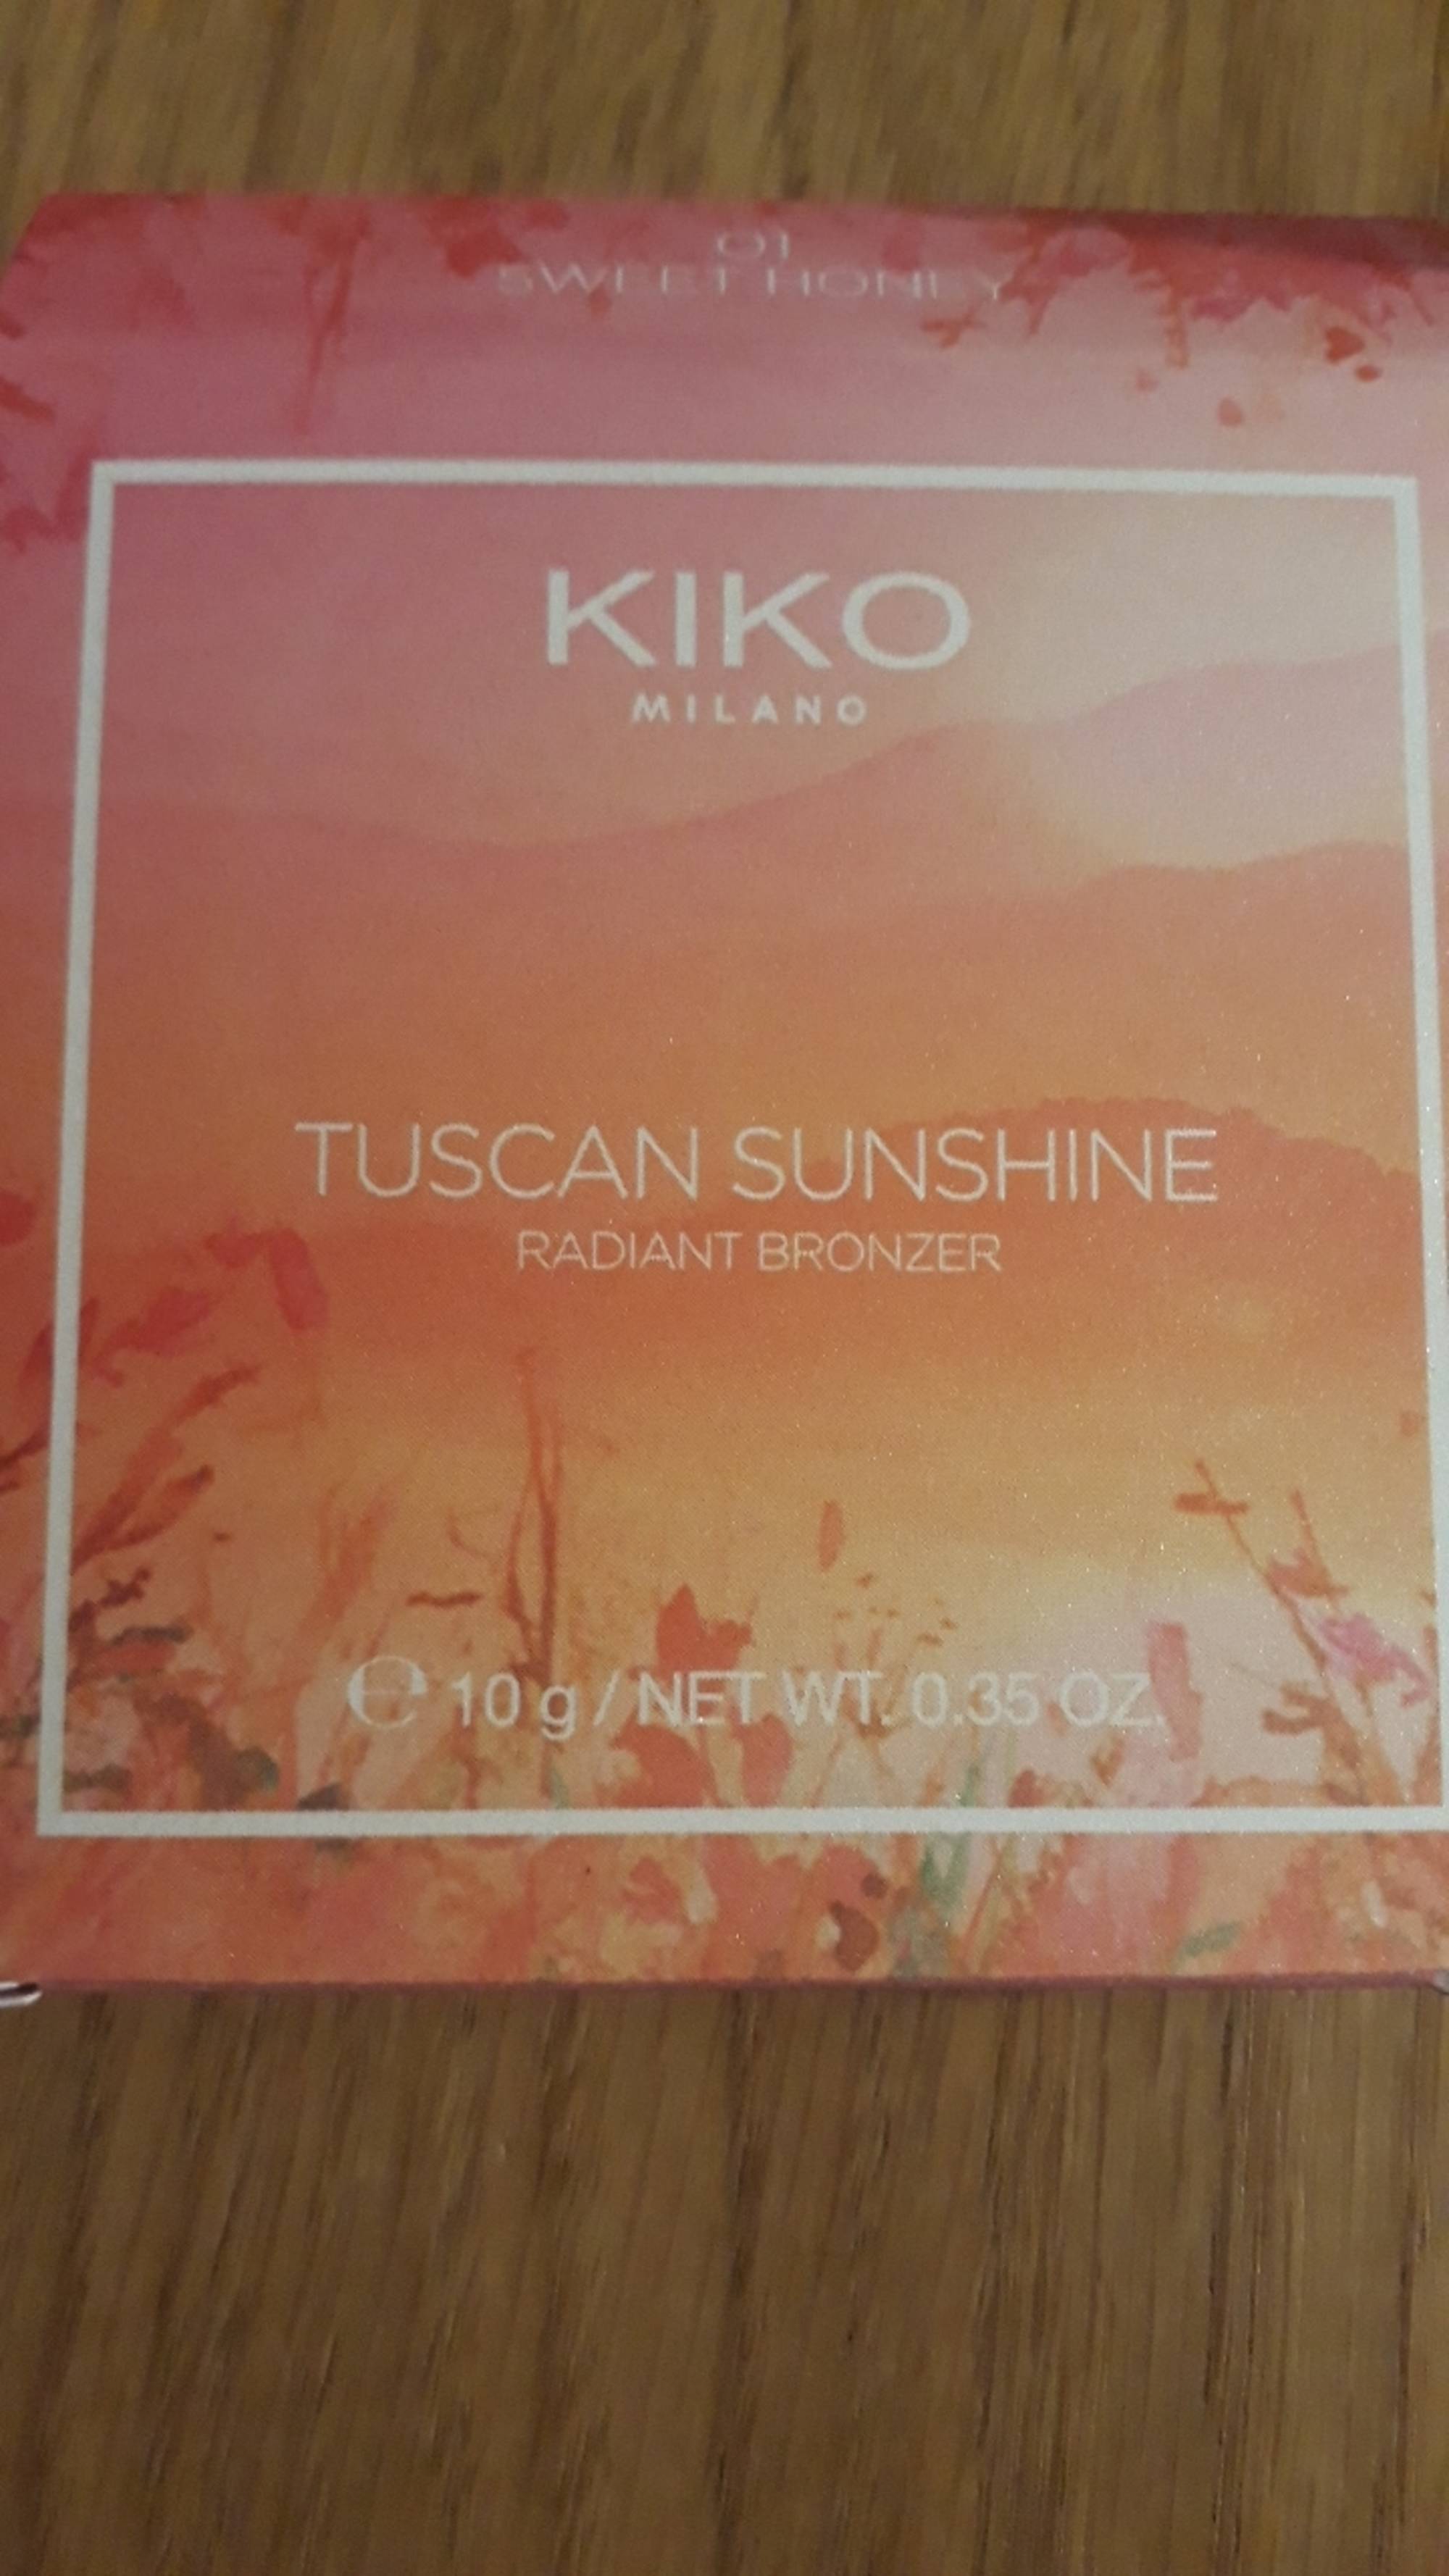 KIKO - Tuscan sunshine - Radiant bronzer